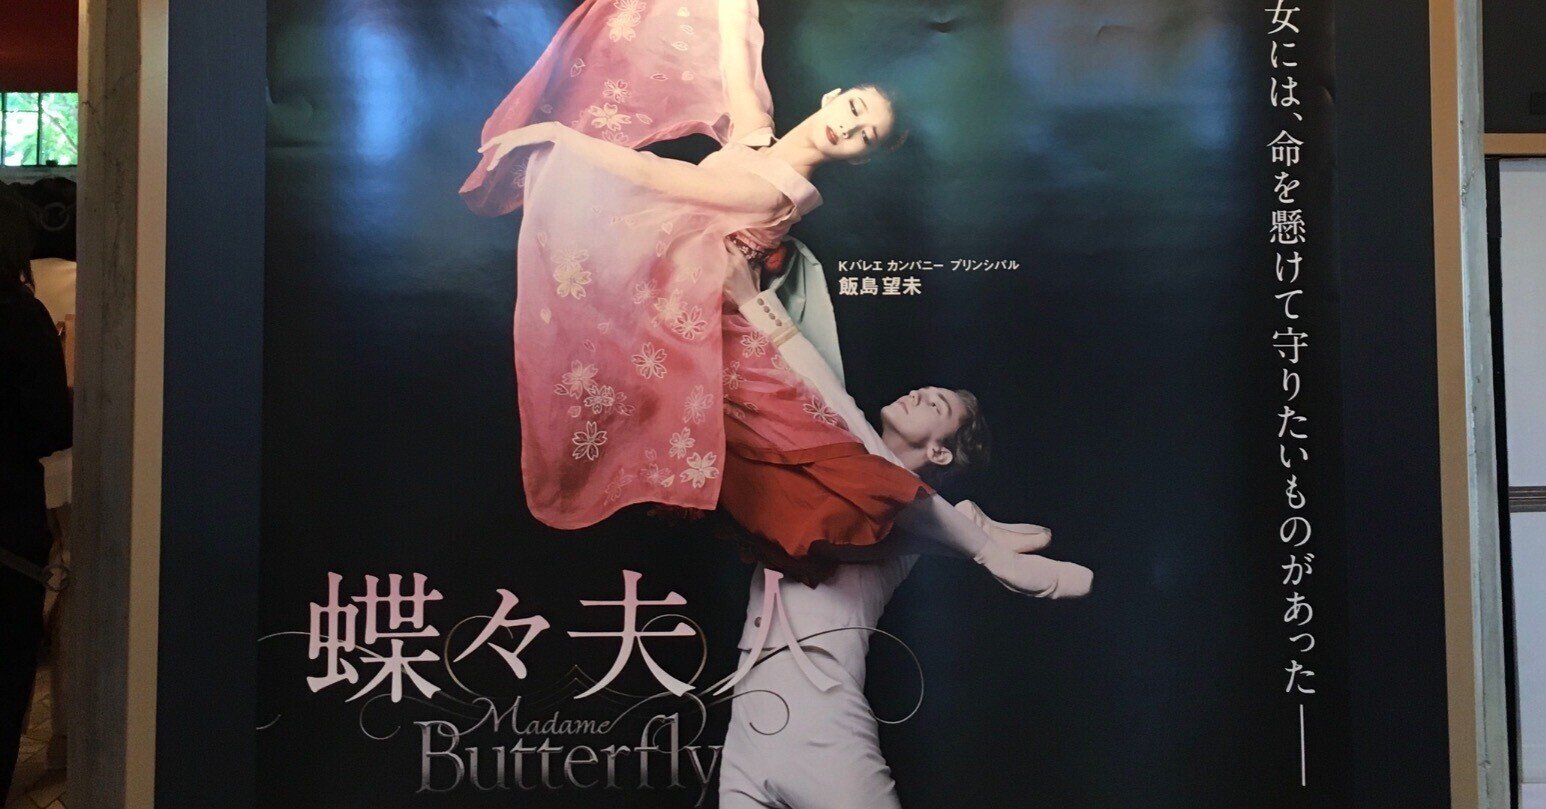 Kバレエ『蝶々夫人』2023Spring 5/24マチネ@東京文化会館大ホール 